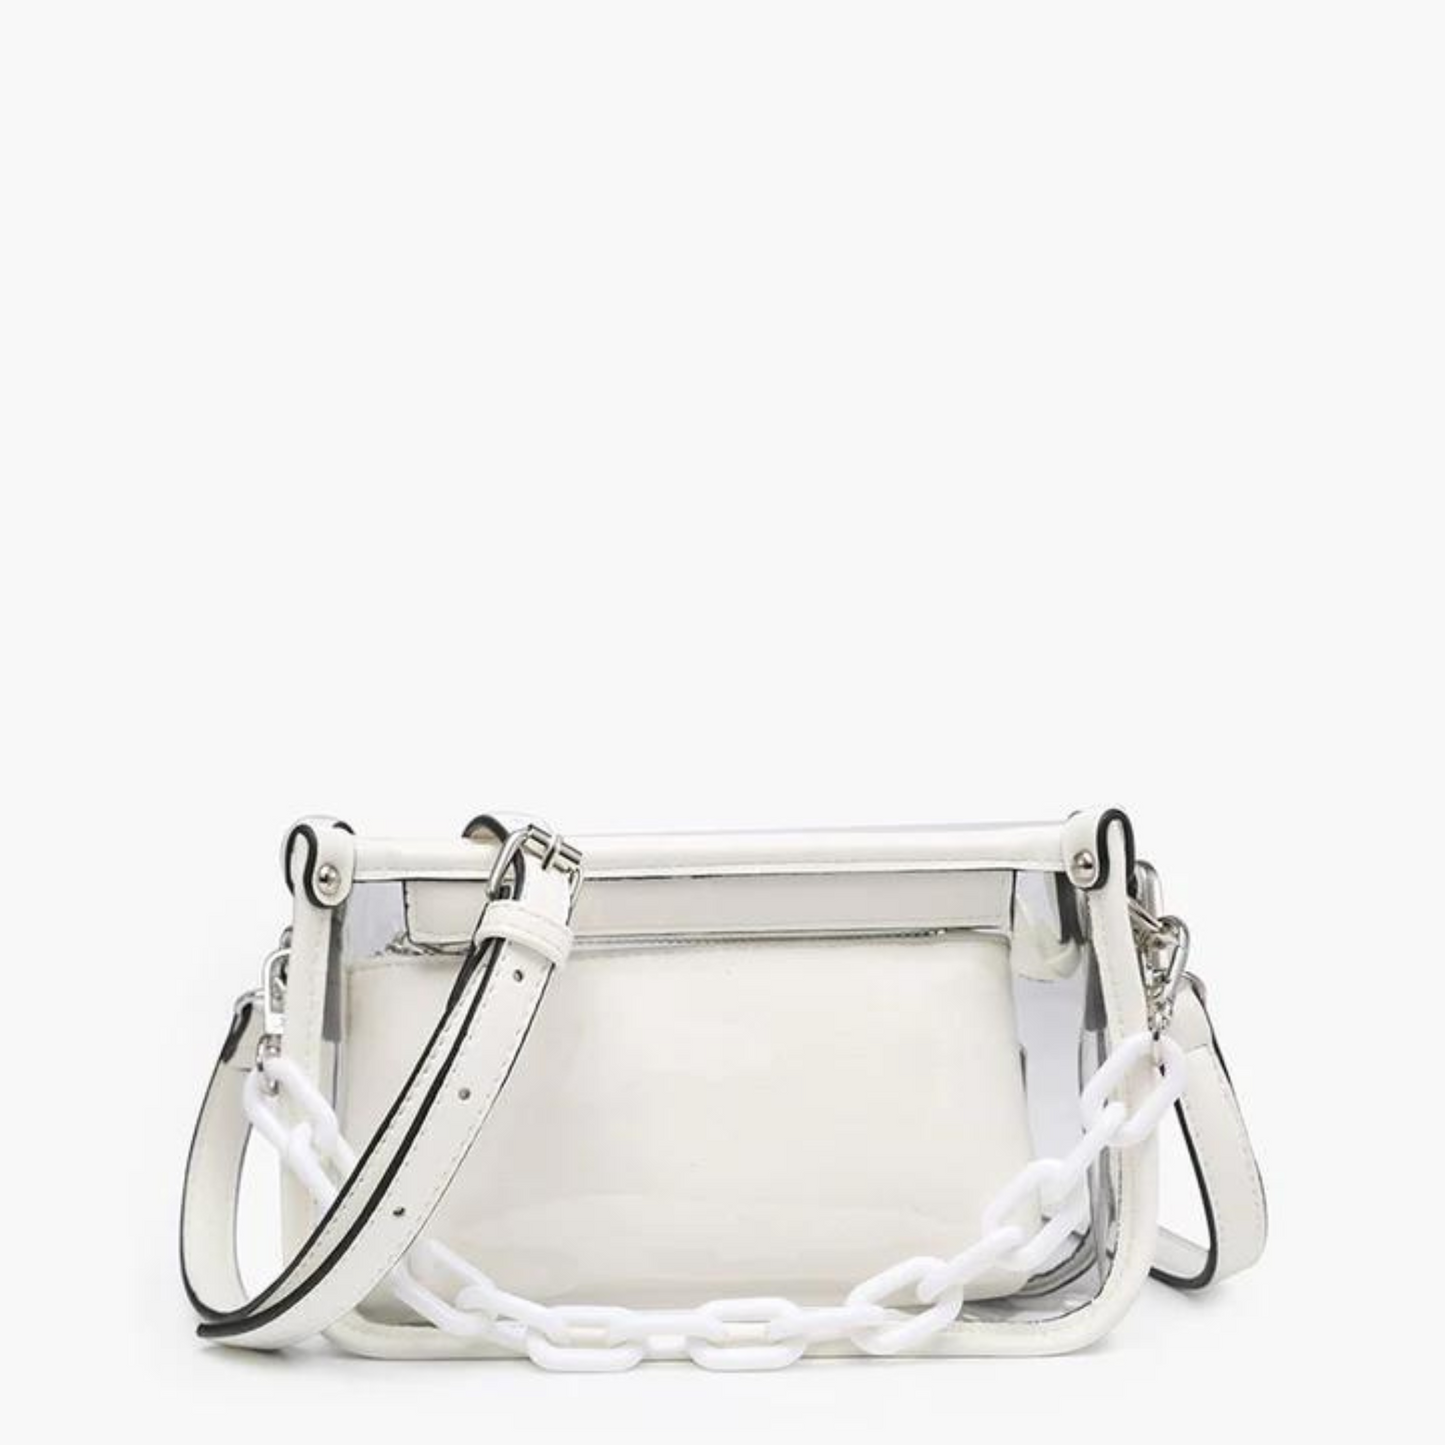 Jessica Clear crossbody purse in white